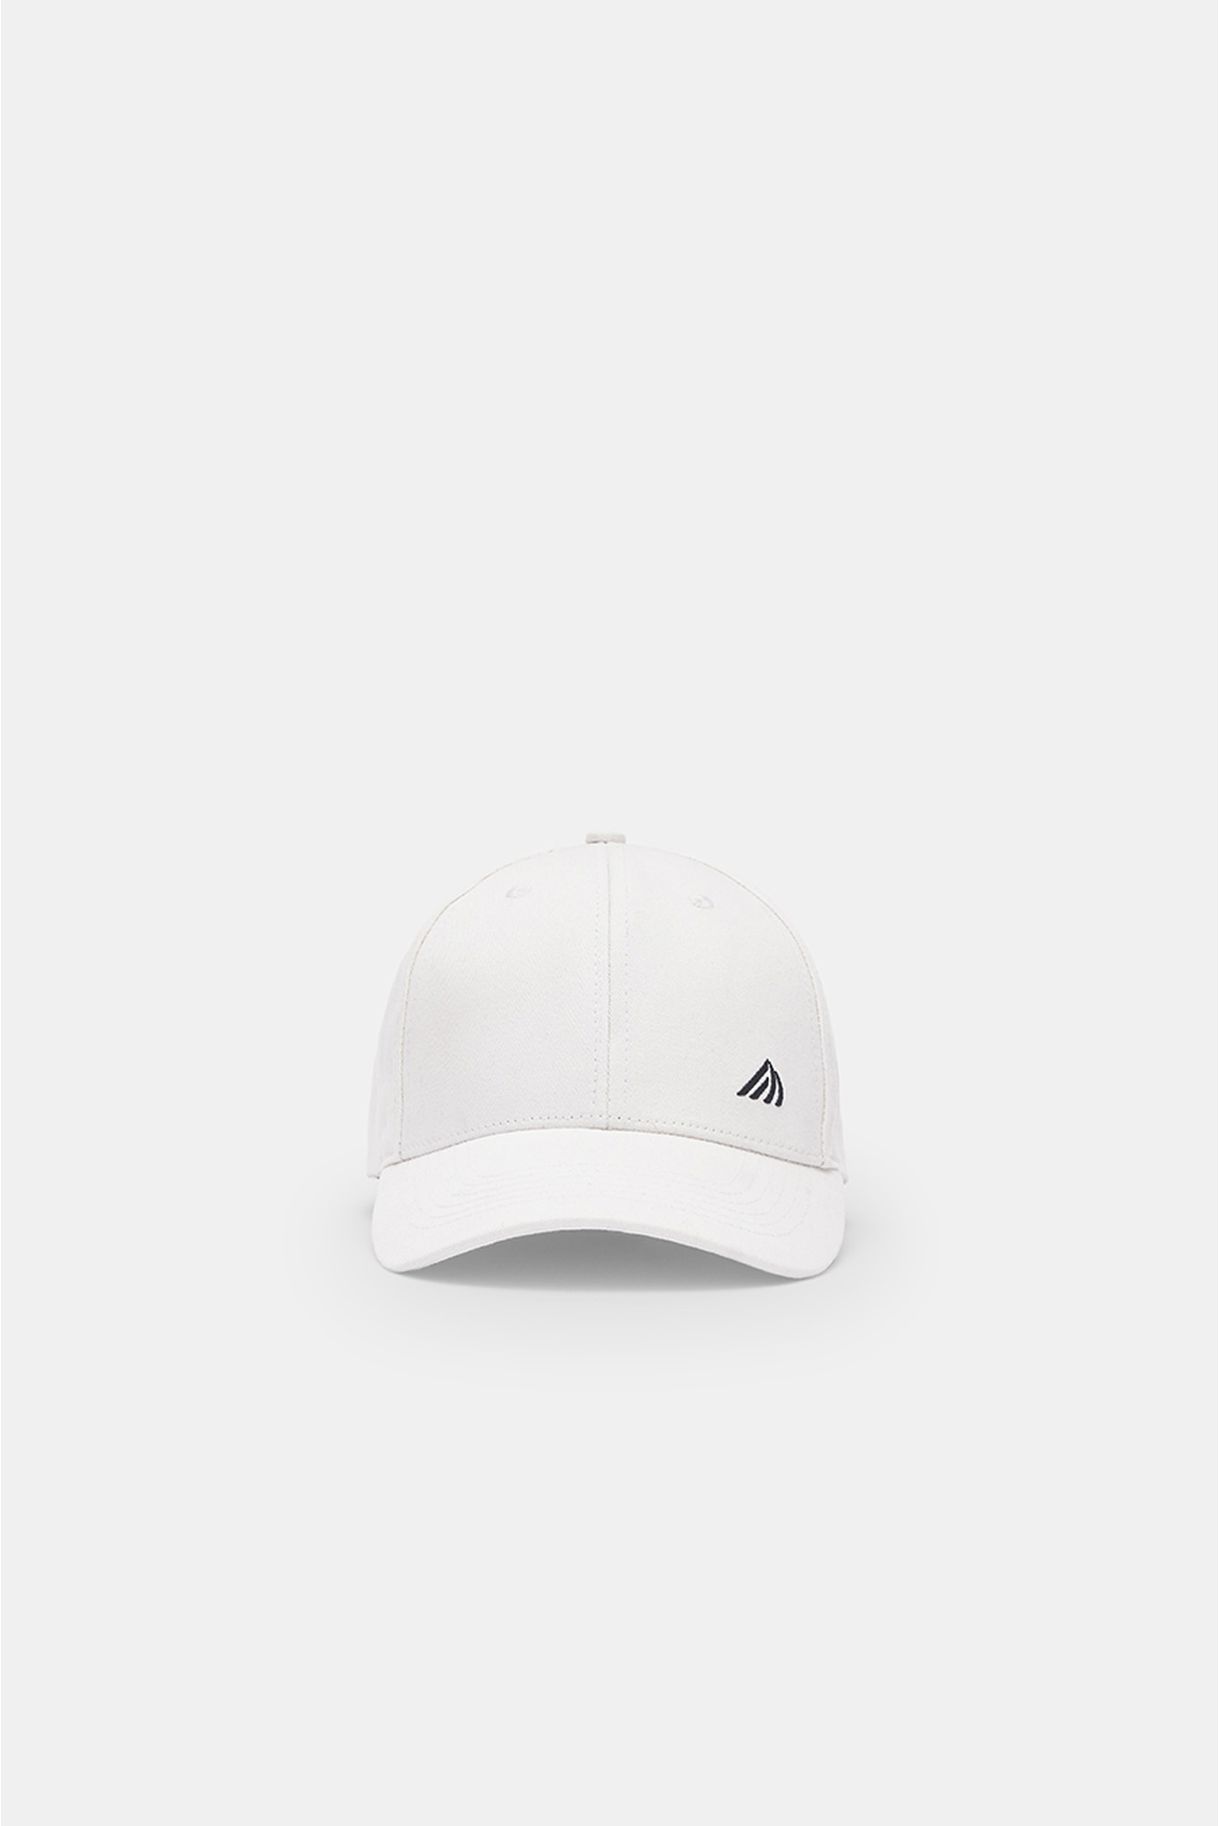 basic hat